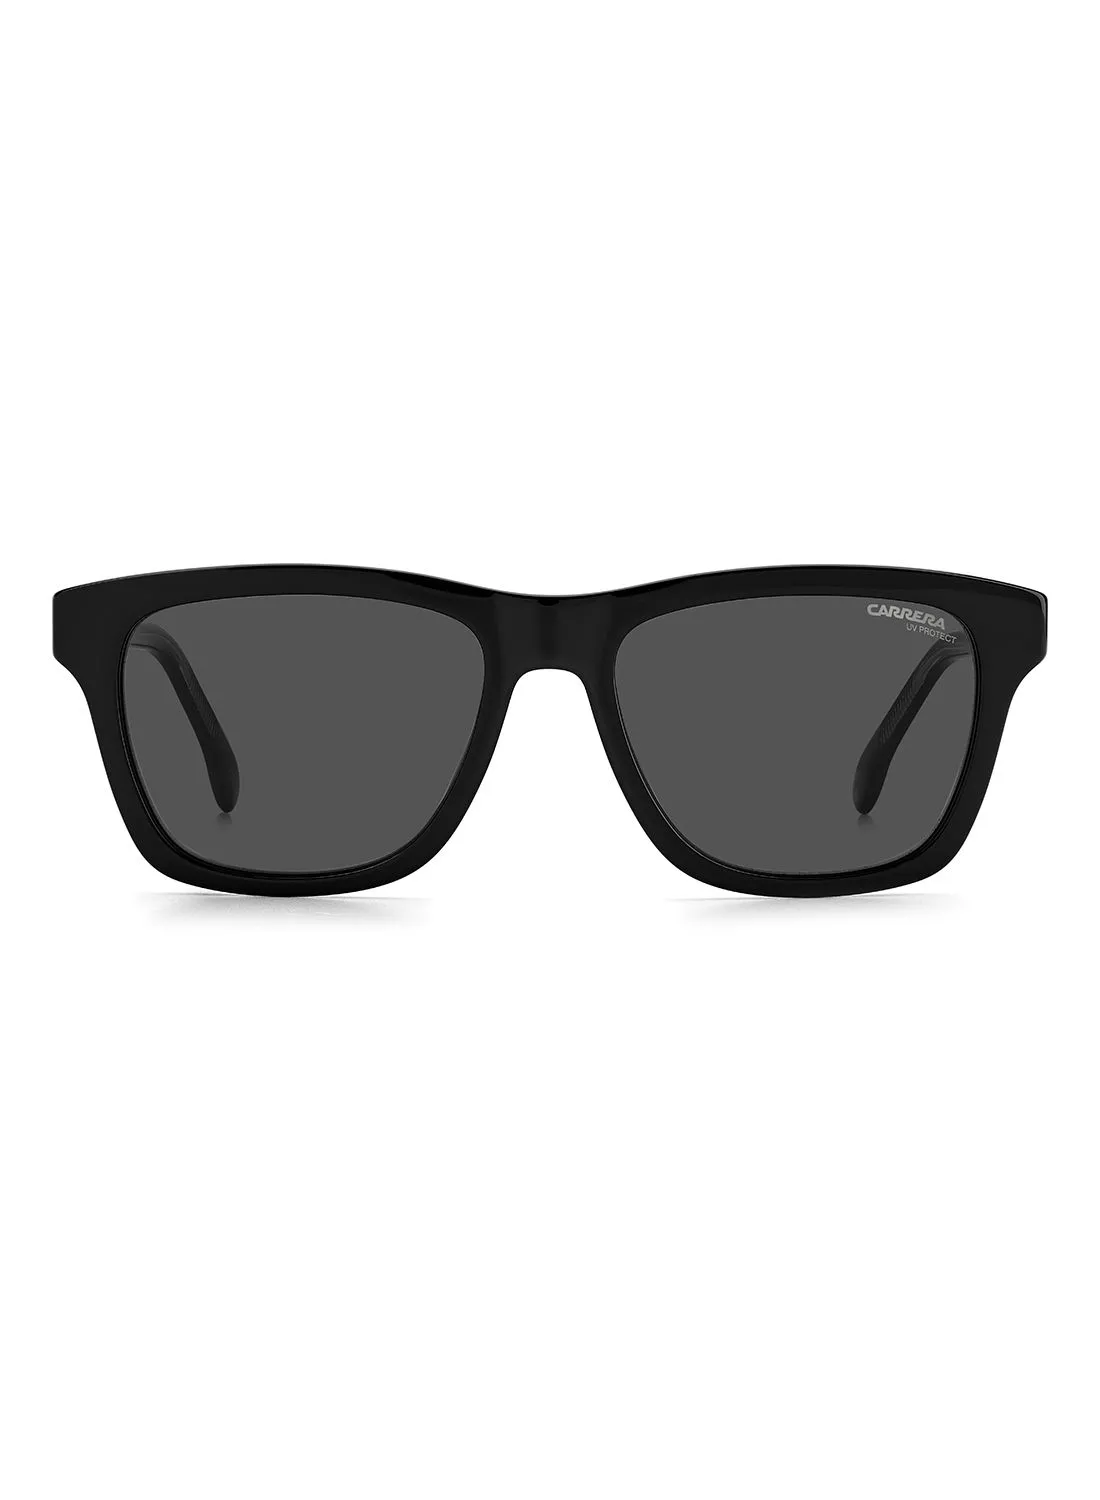 CARRERA Men's Rectangular / Square Sunglasses CARRERA 266/S BLACK 53